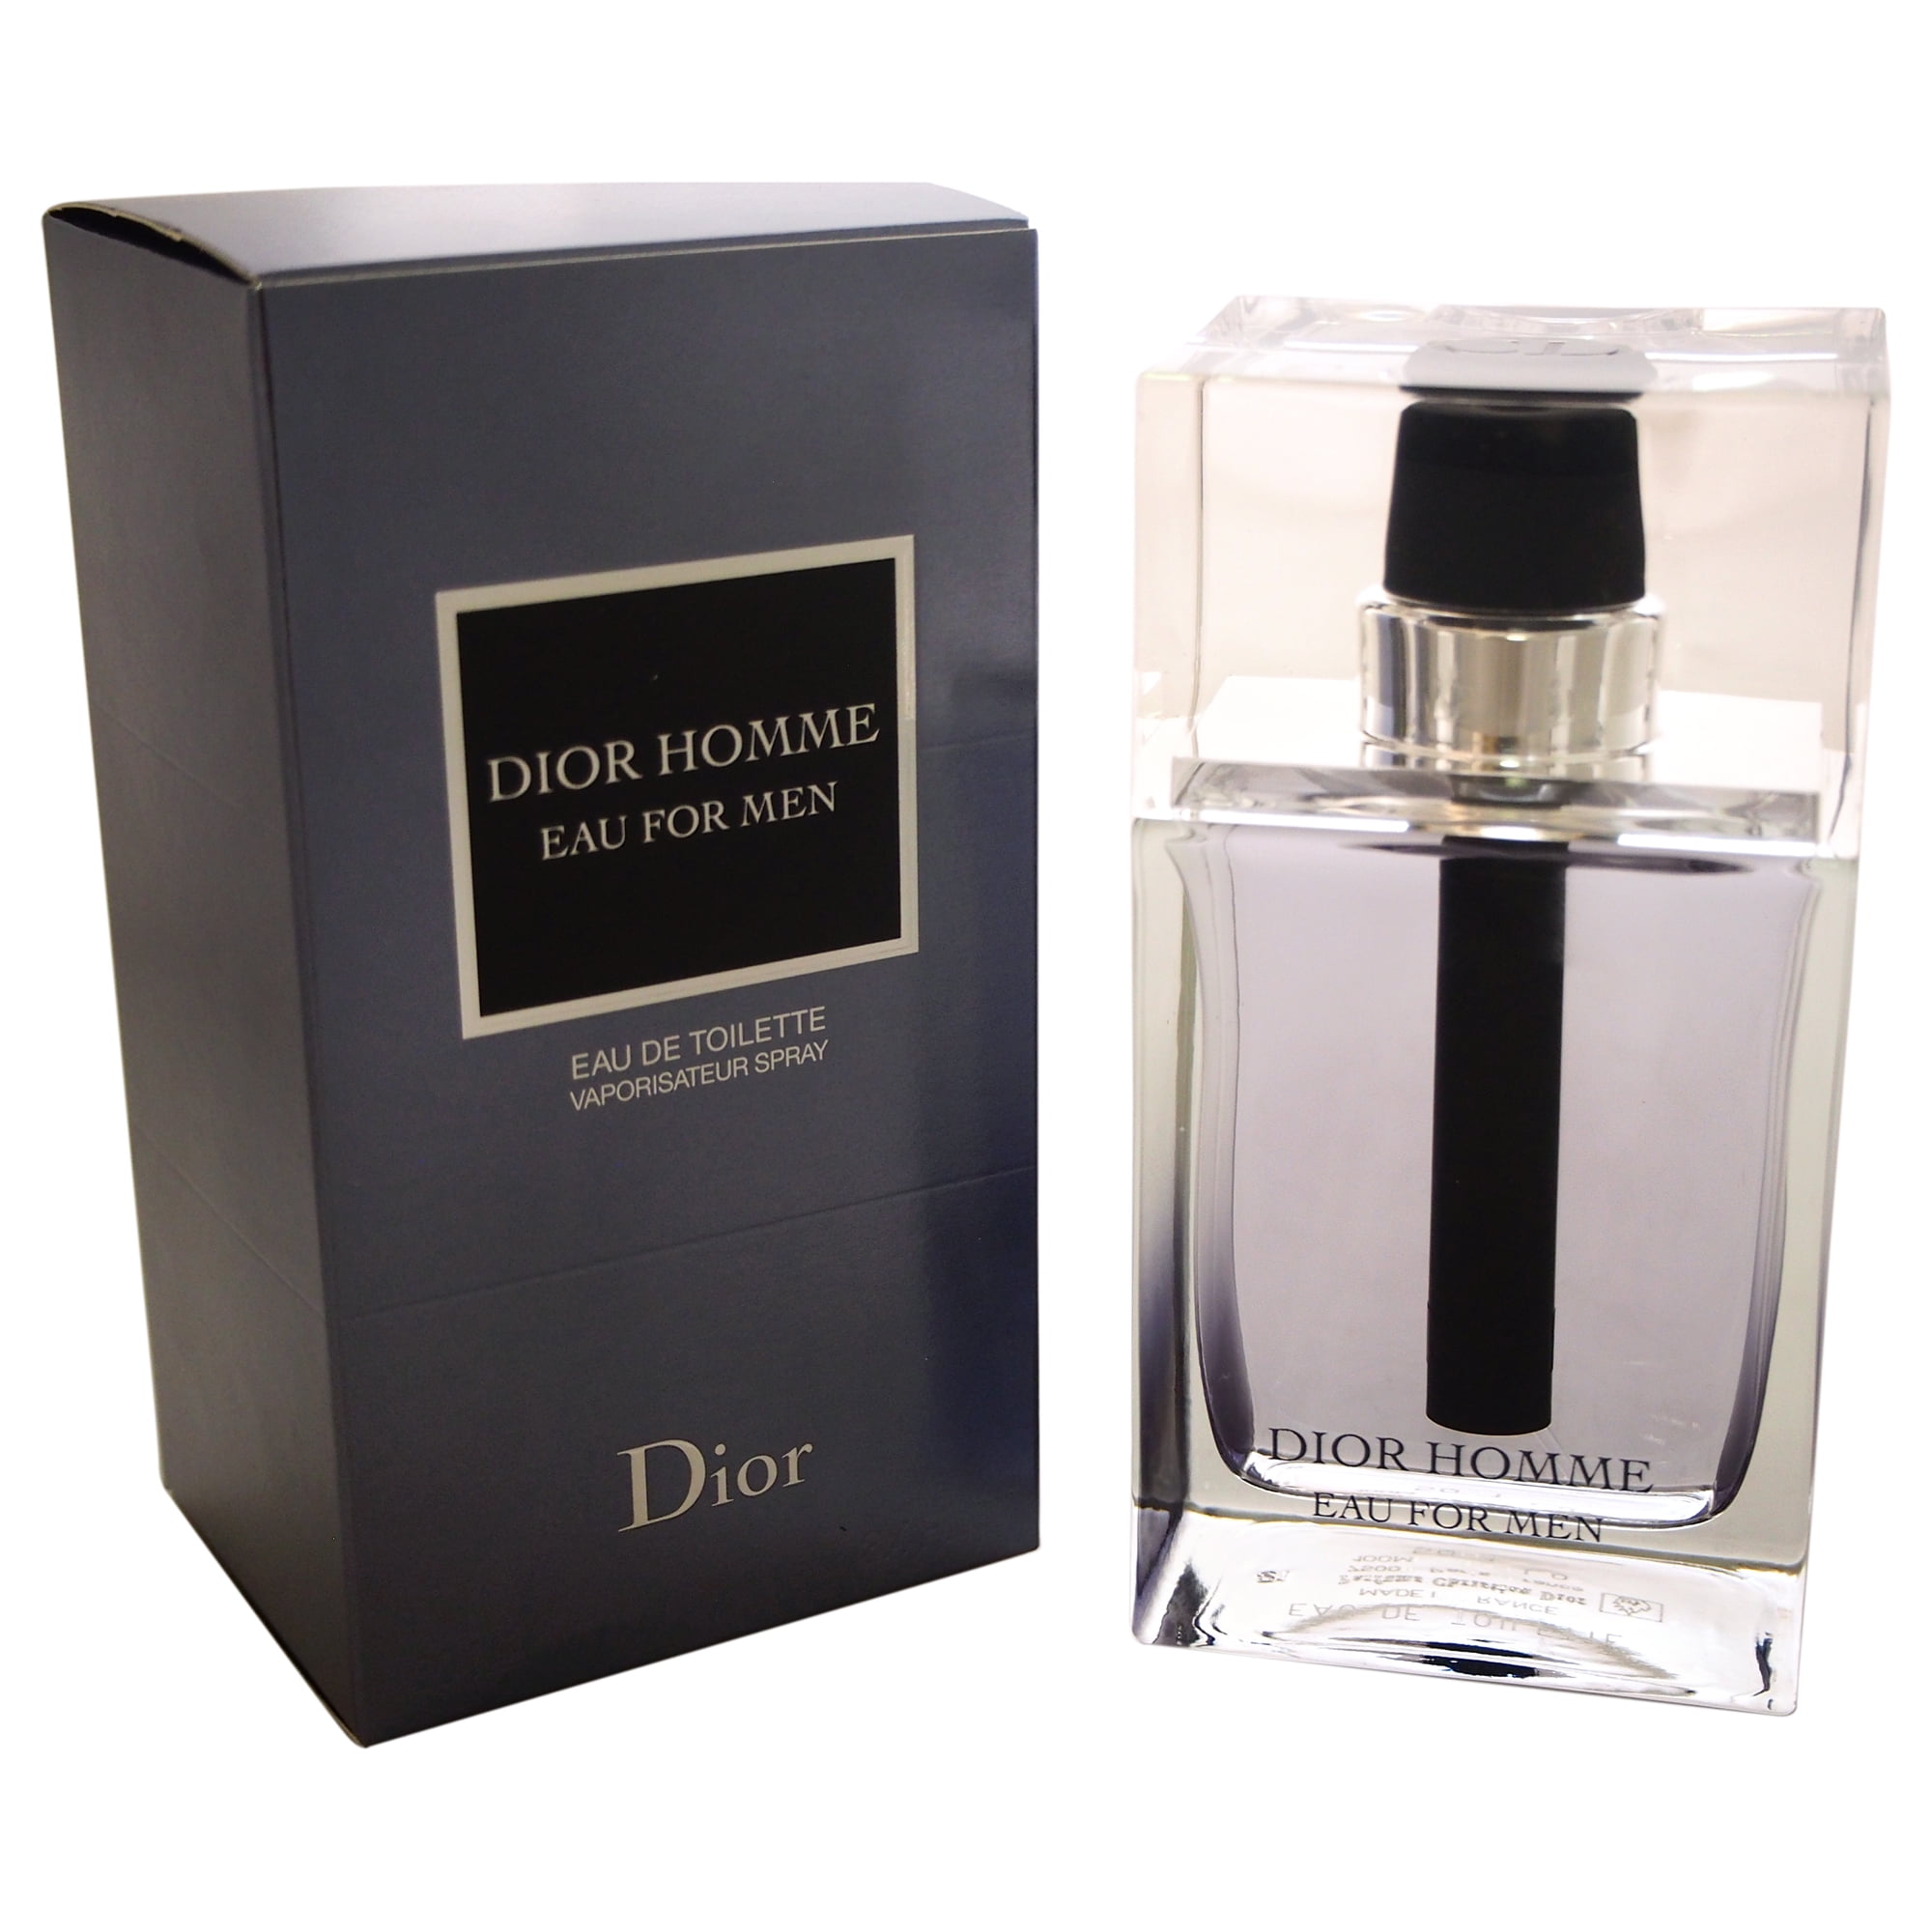 Dior Homme Eau For Men by Christian Dior for Men - 1.7 oz EDT Spray